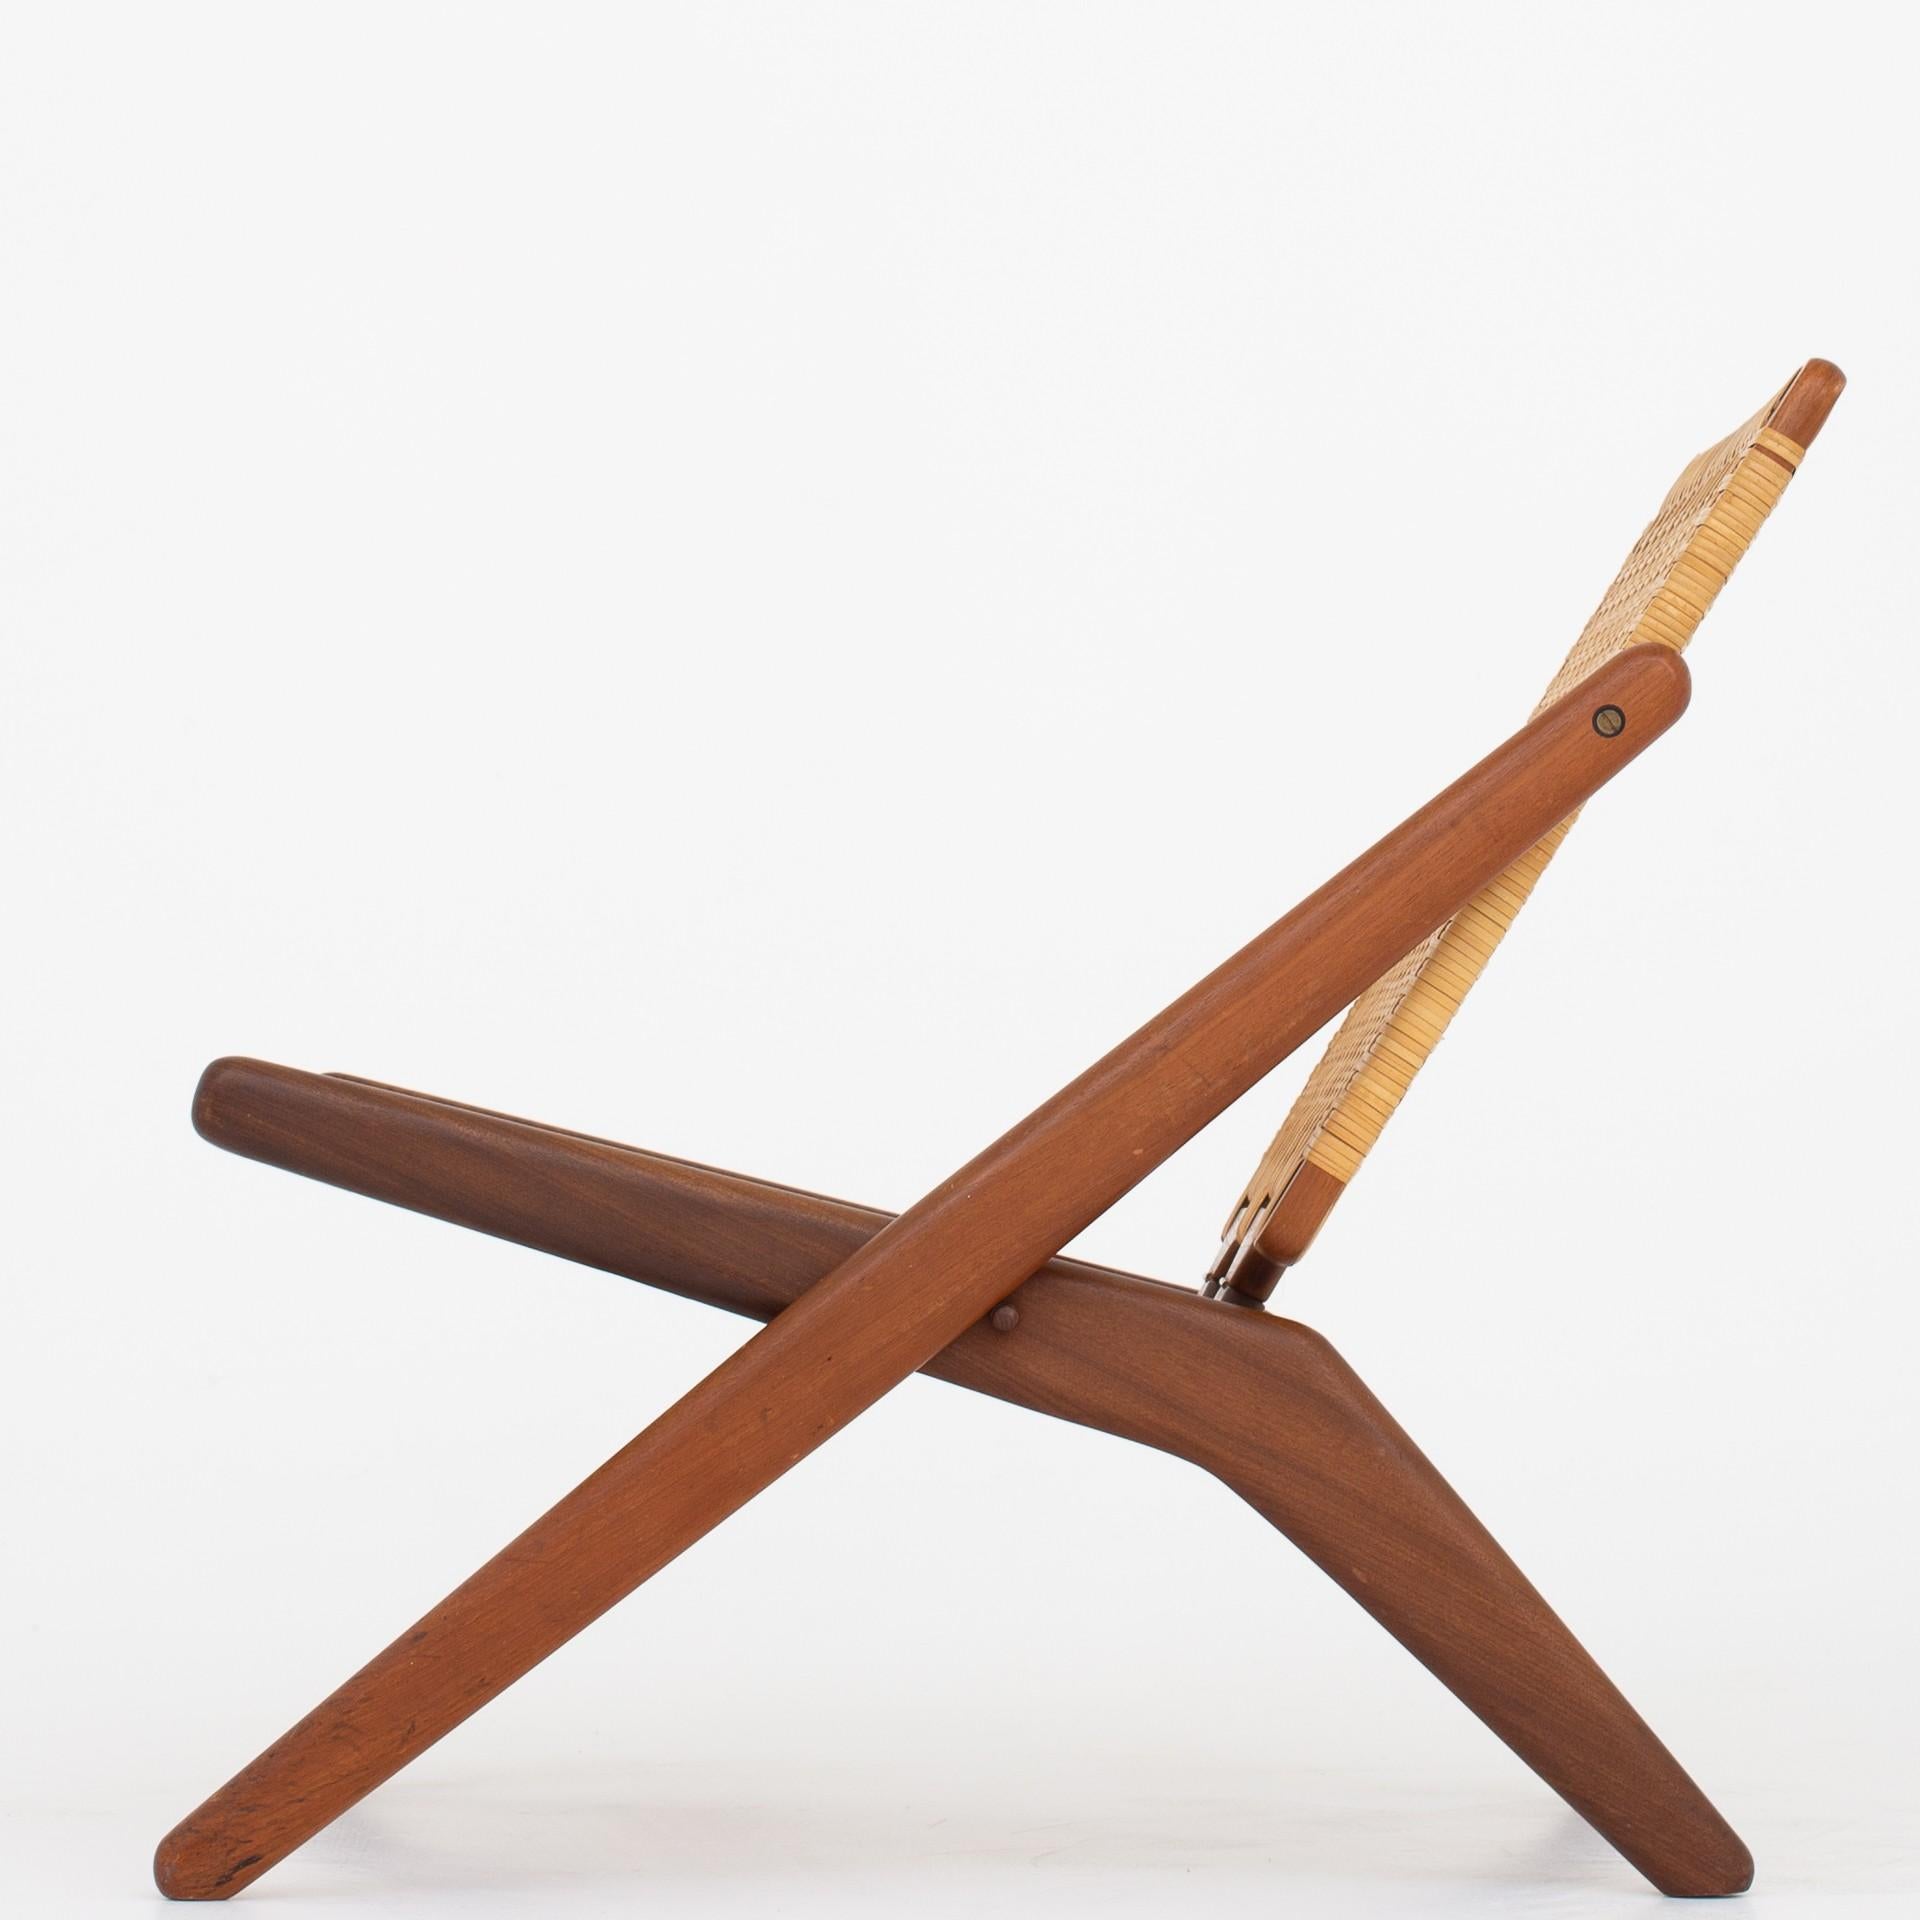 Folding chair in teak with original cane, circa 1957. Maker Jutex.